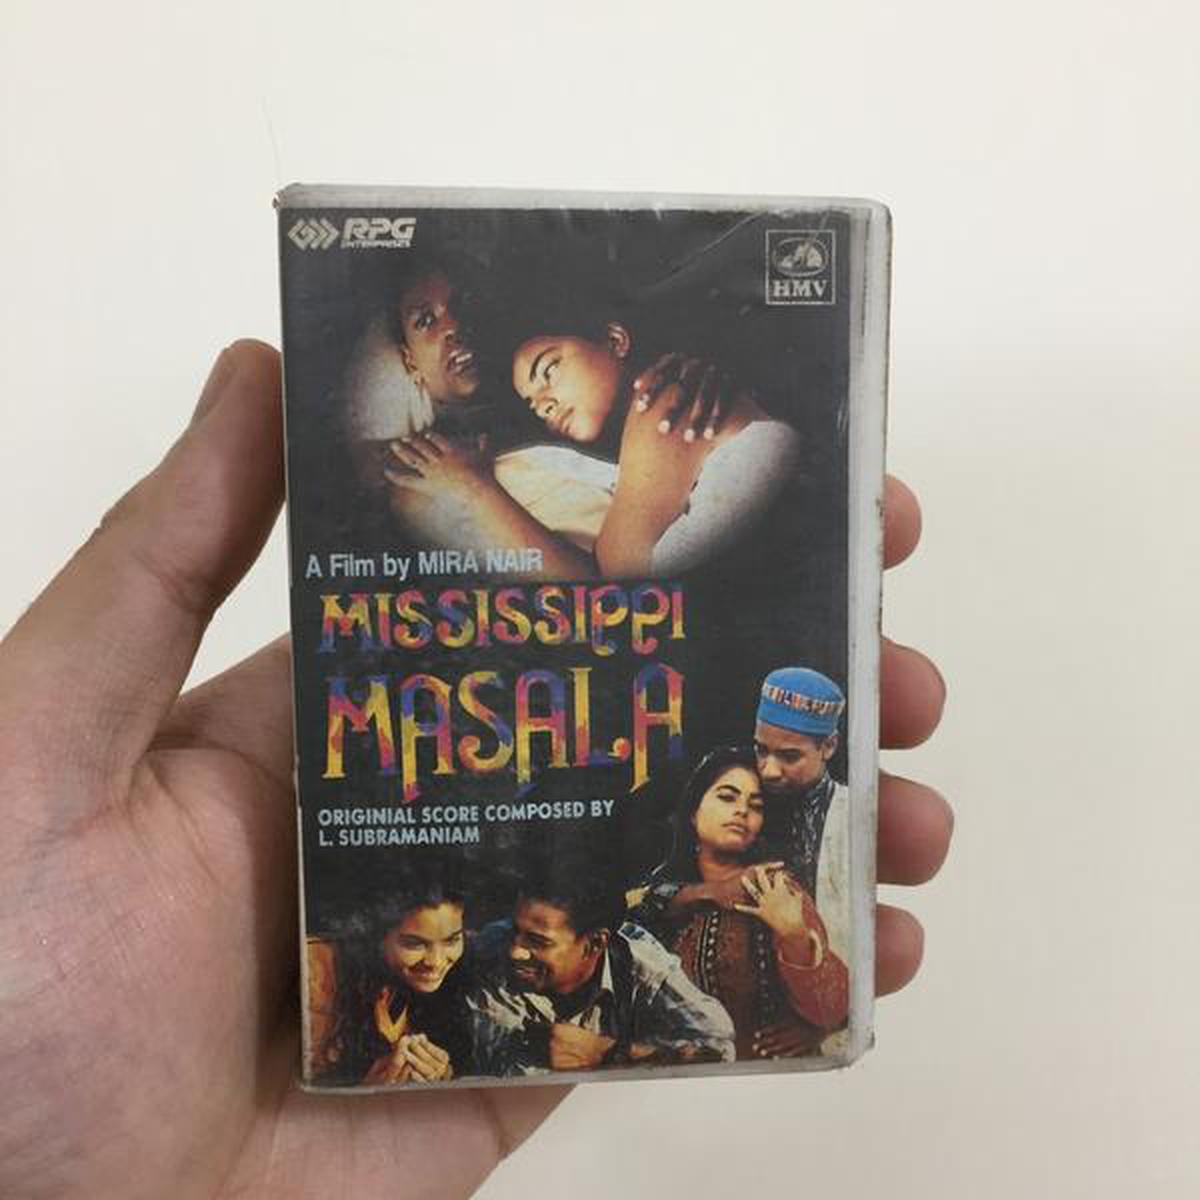 ‘Mississippi Masala’ soundtrack cassette tape